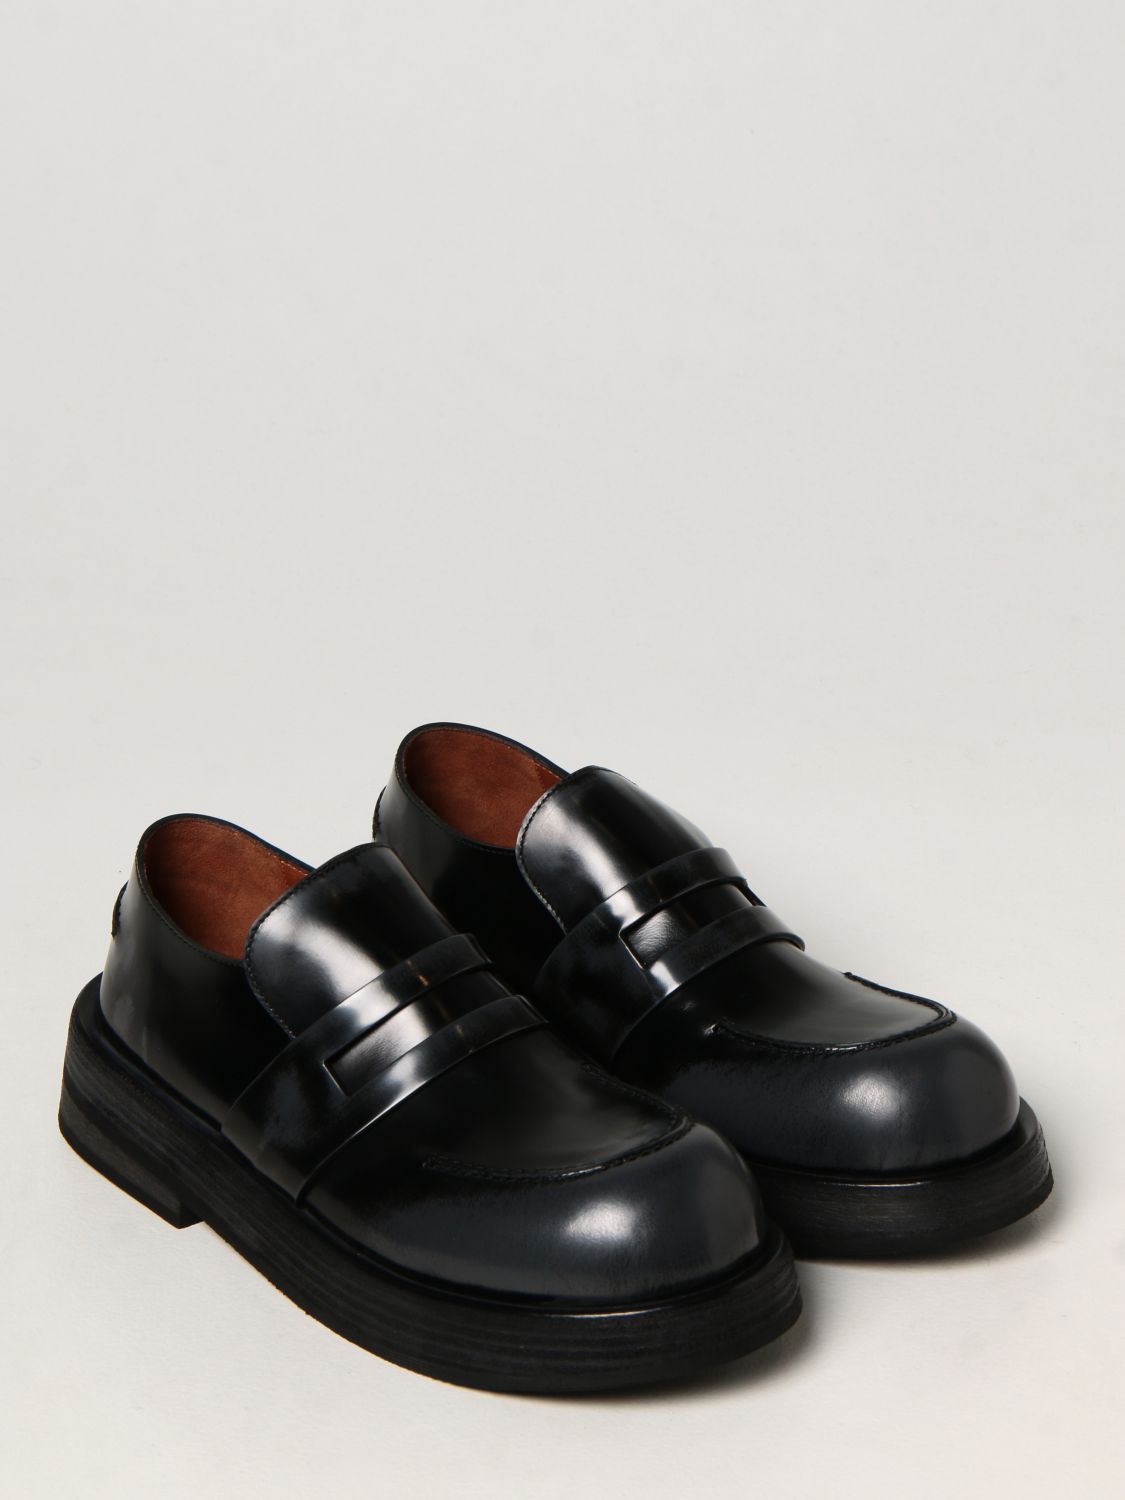 Mocassins Marsèll: Chaussures homme Marsell noir 2